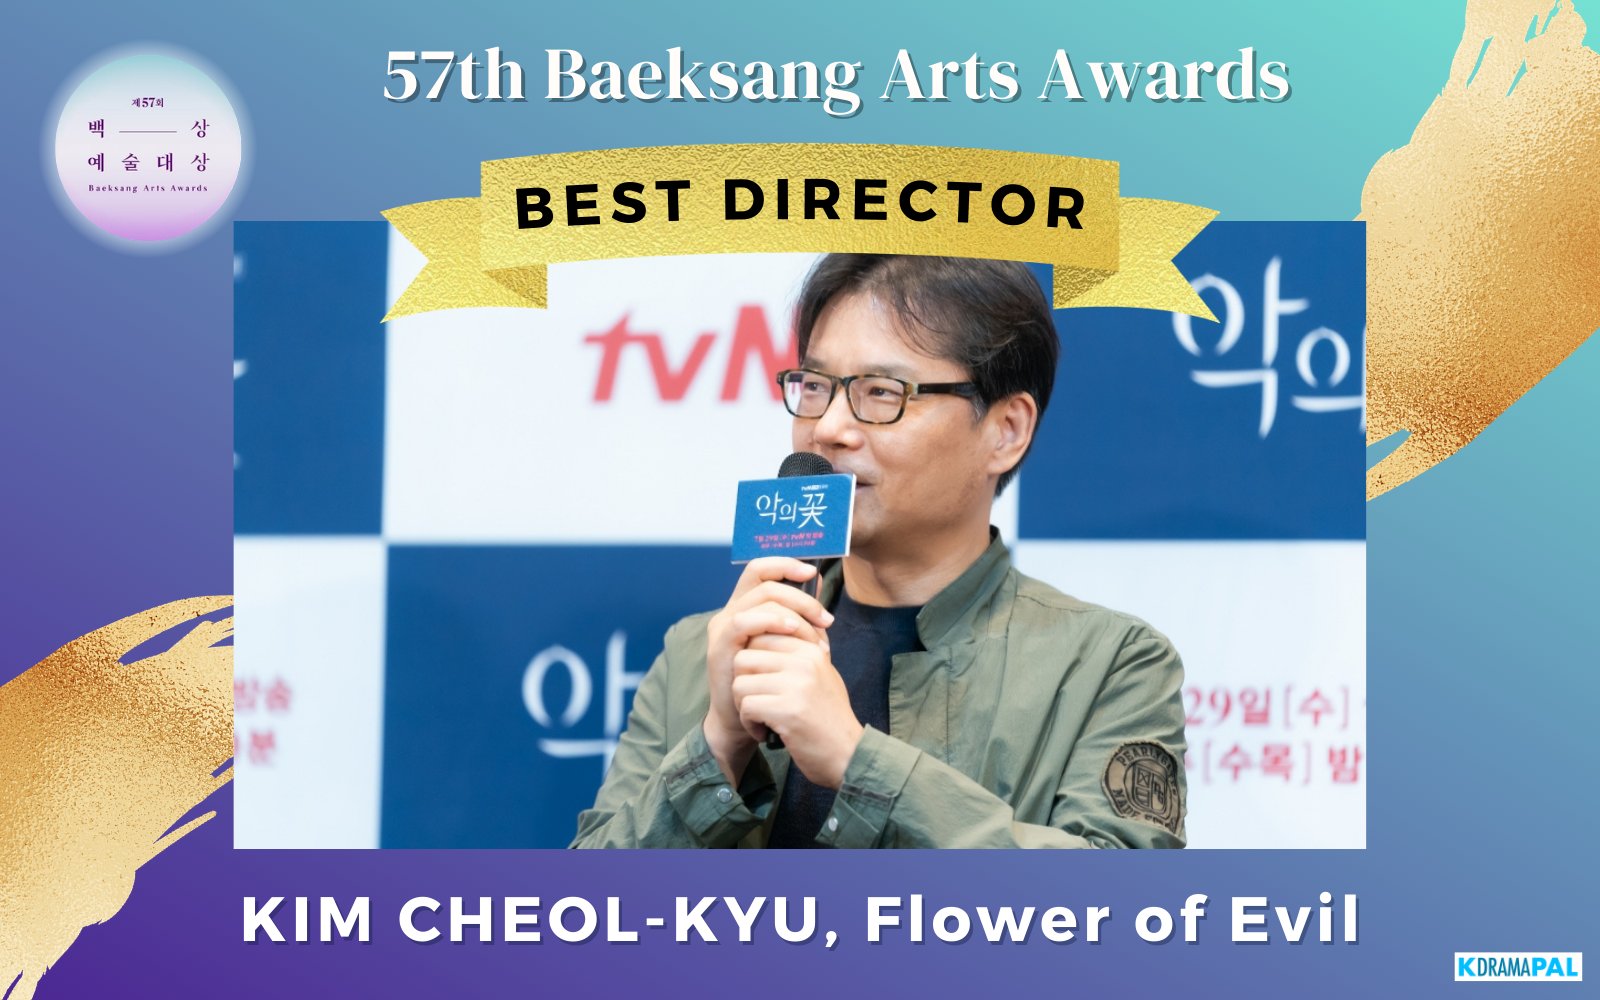 57th Baeksang Arts Awards Mejor director - Kim Cheol-kyu por Flower of Evil